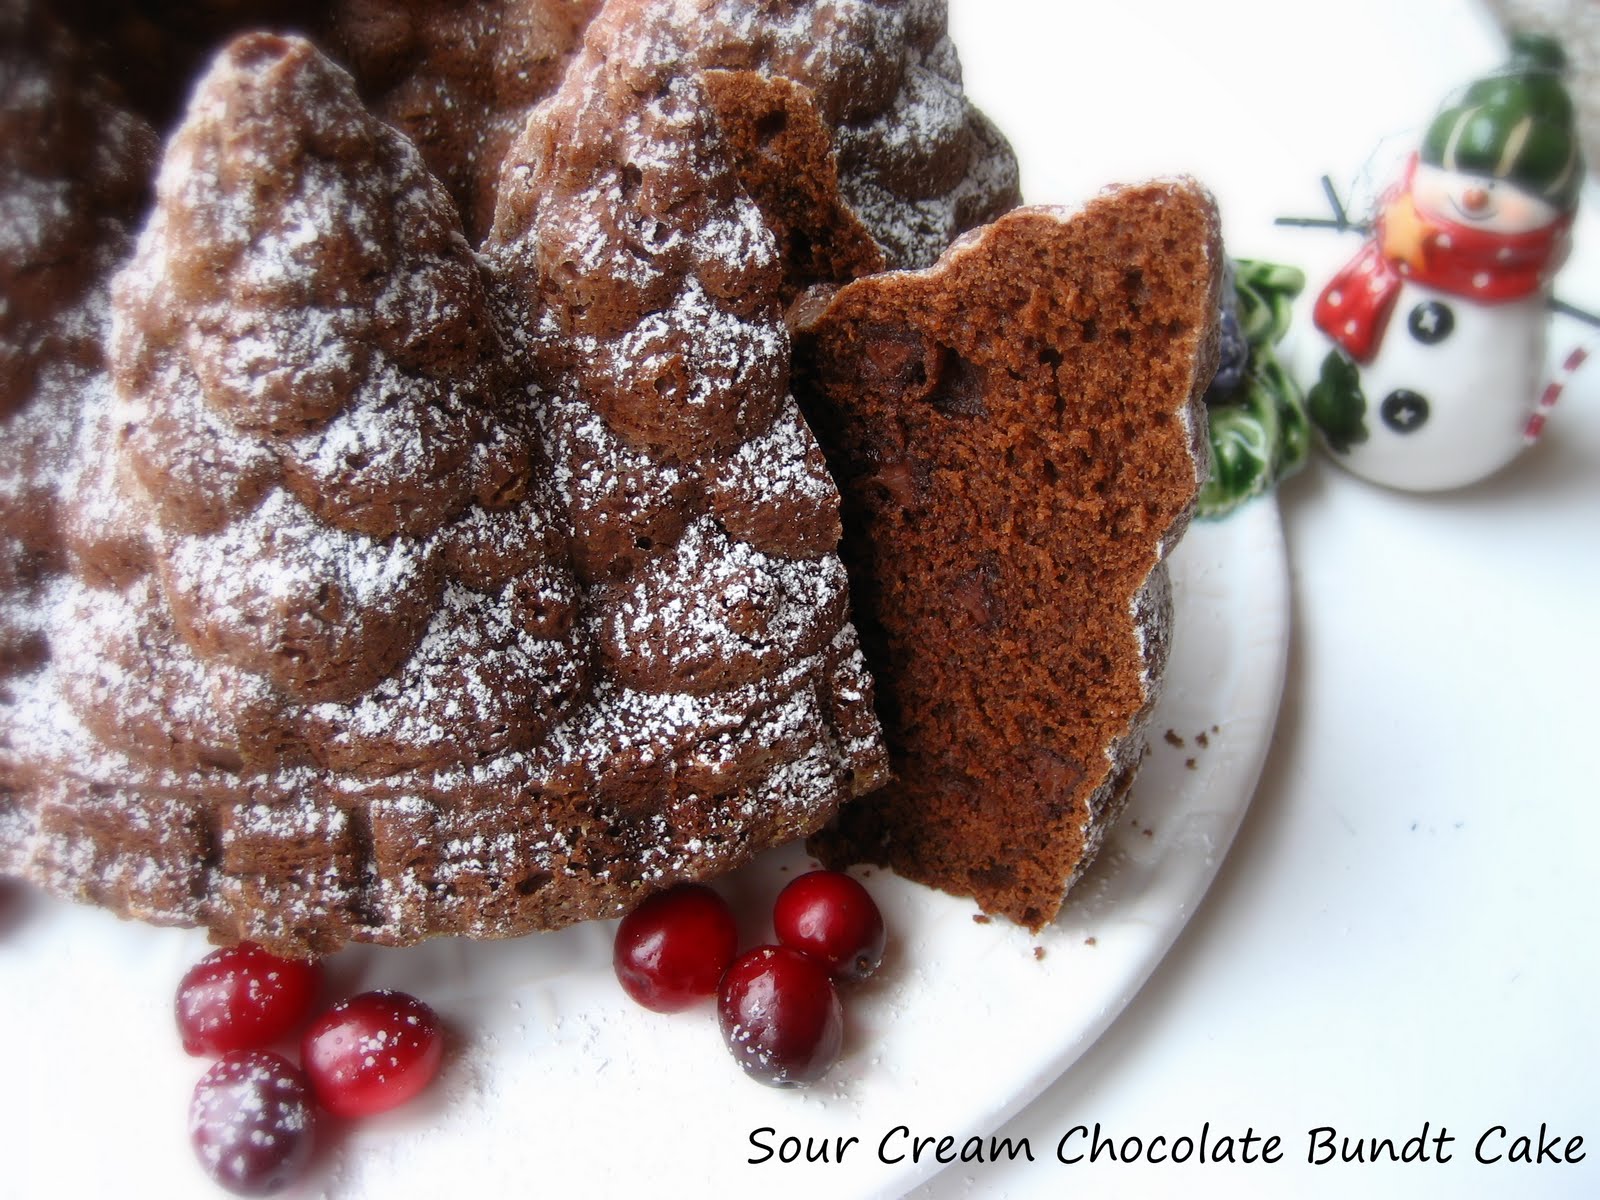 Home Cooking In Montana: Nordic Ware Christmas Tree Bundt Pan...Sour Cream Orange Chocolate Cake